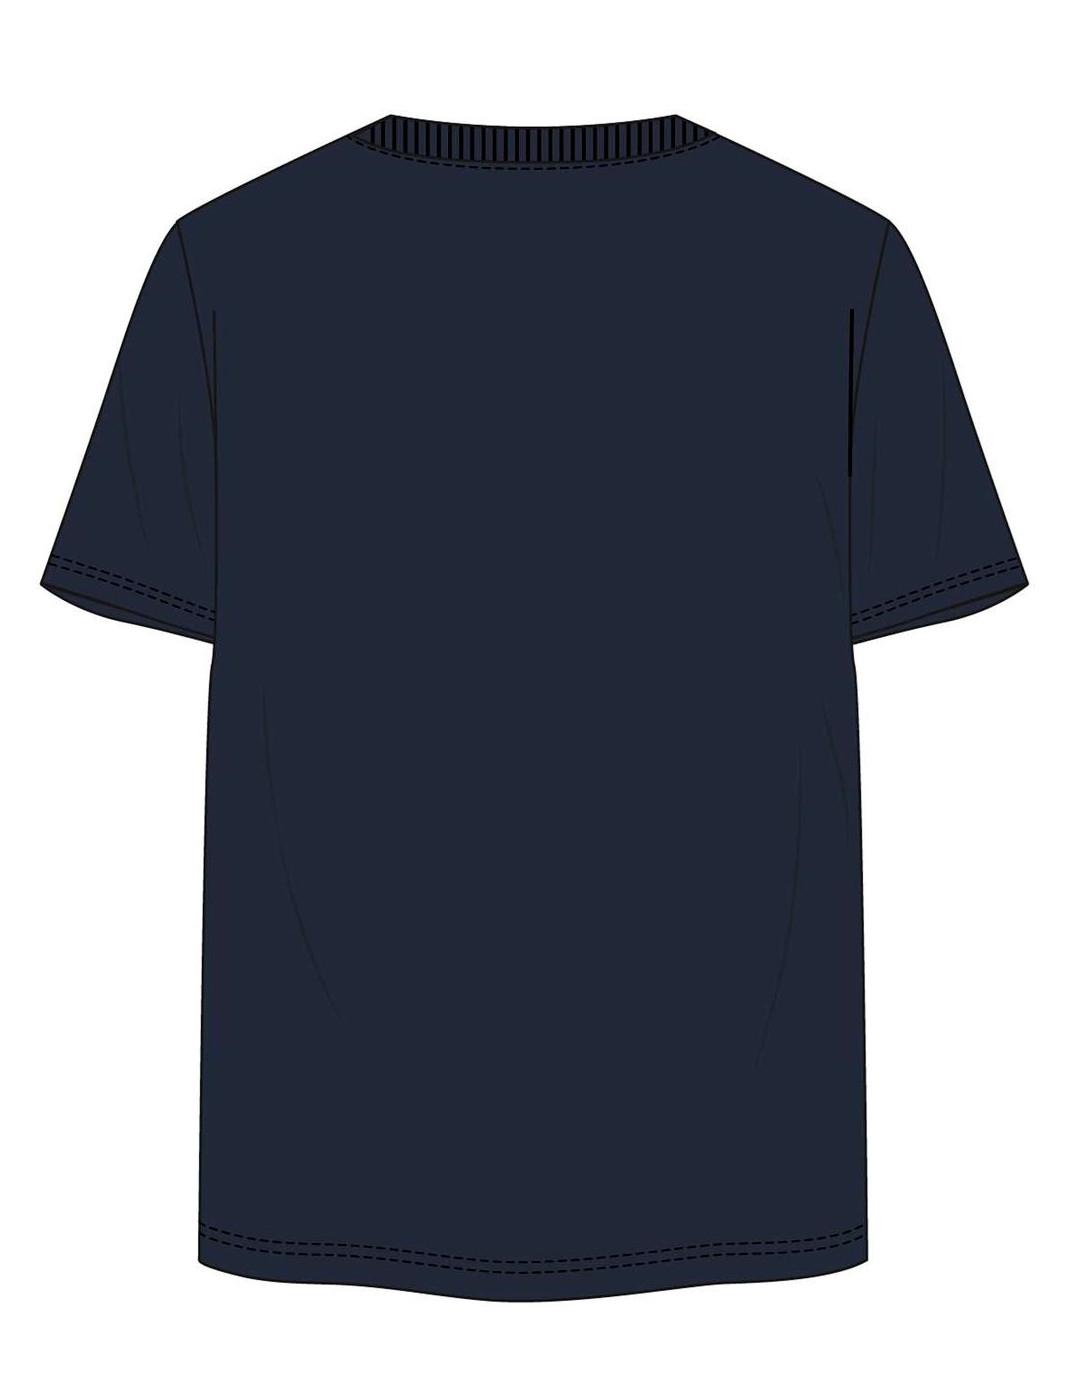 Camiseta Jack&Jones Dragonball marino de hombre-Se